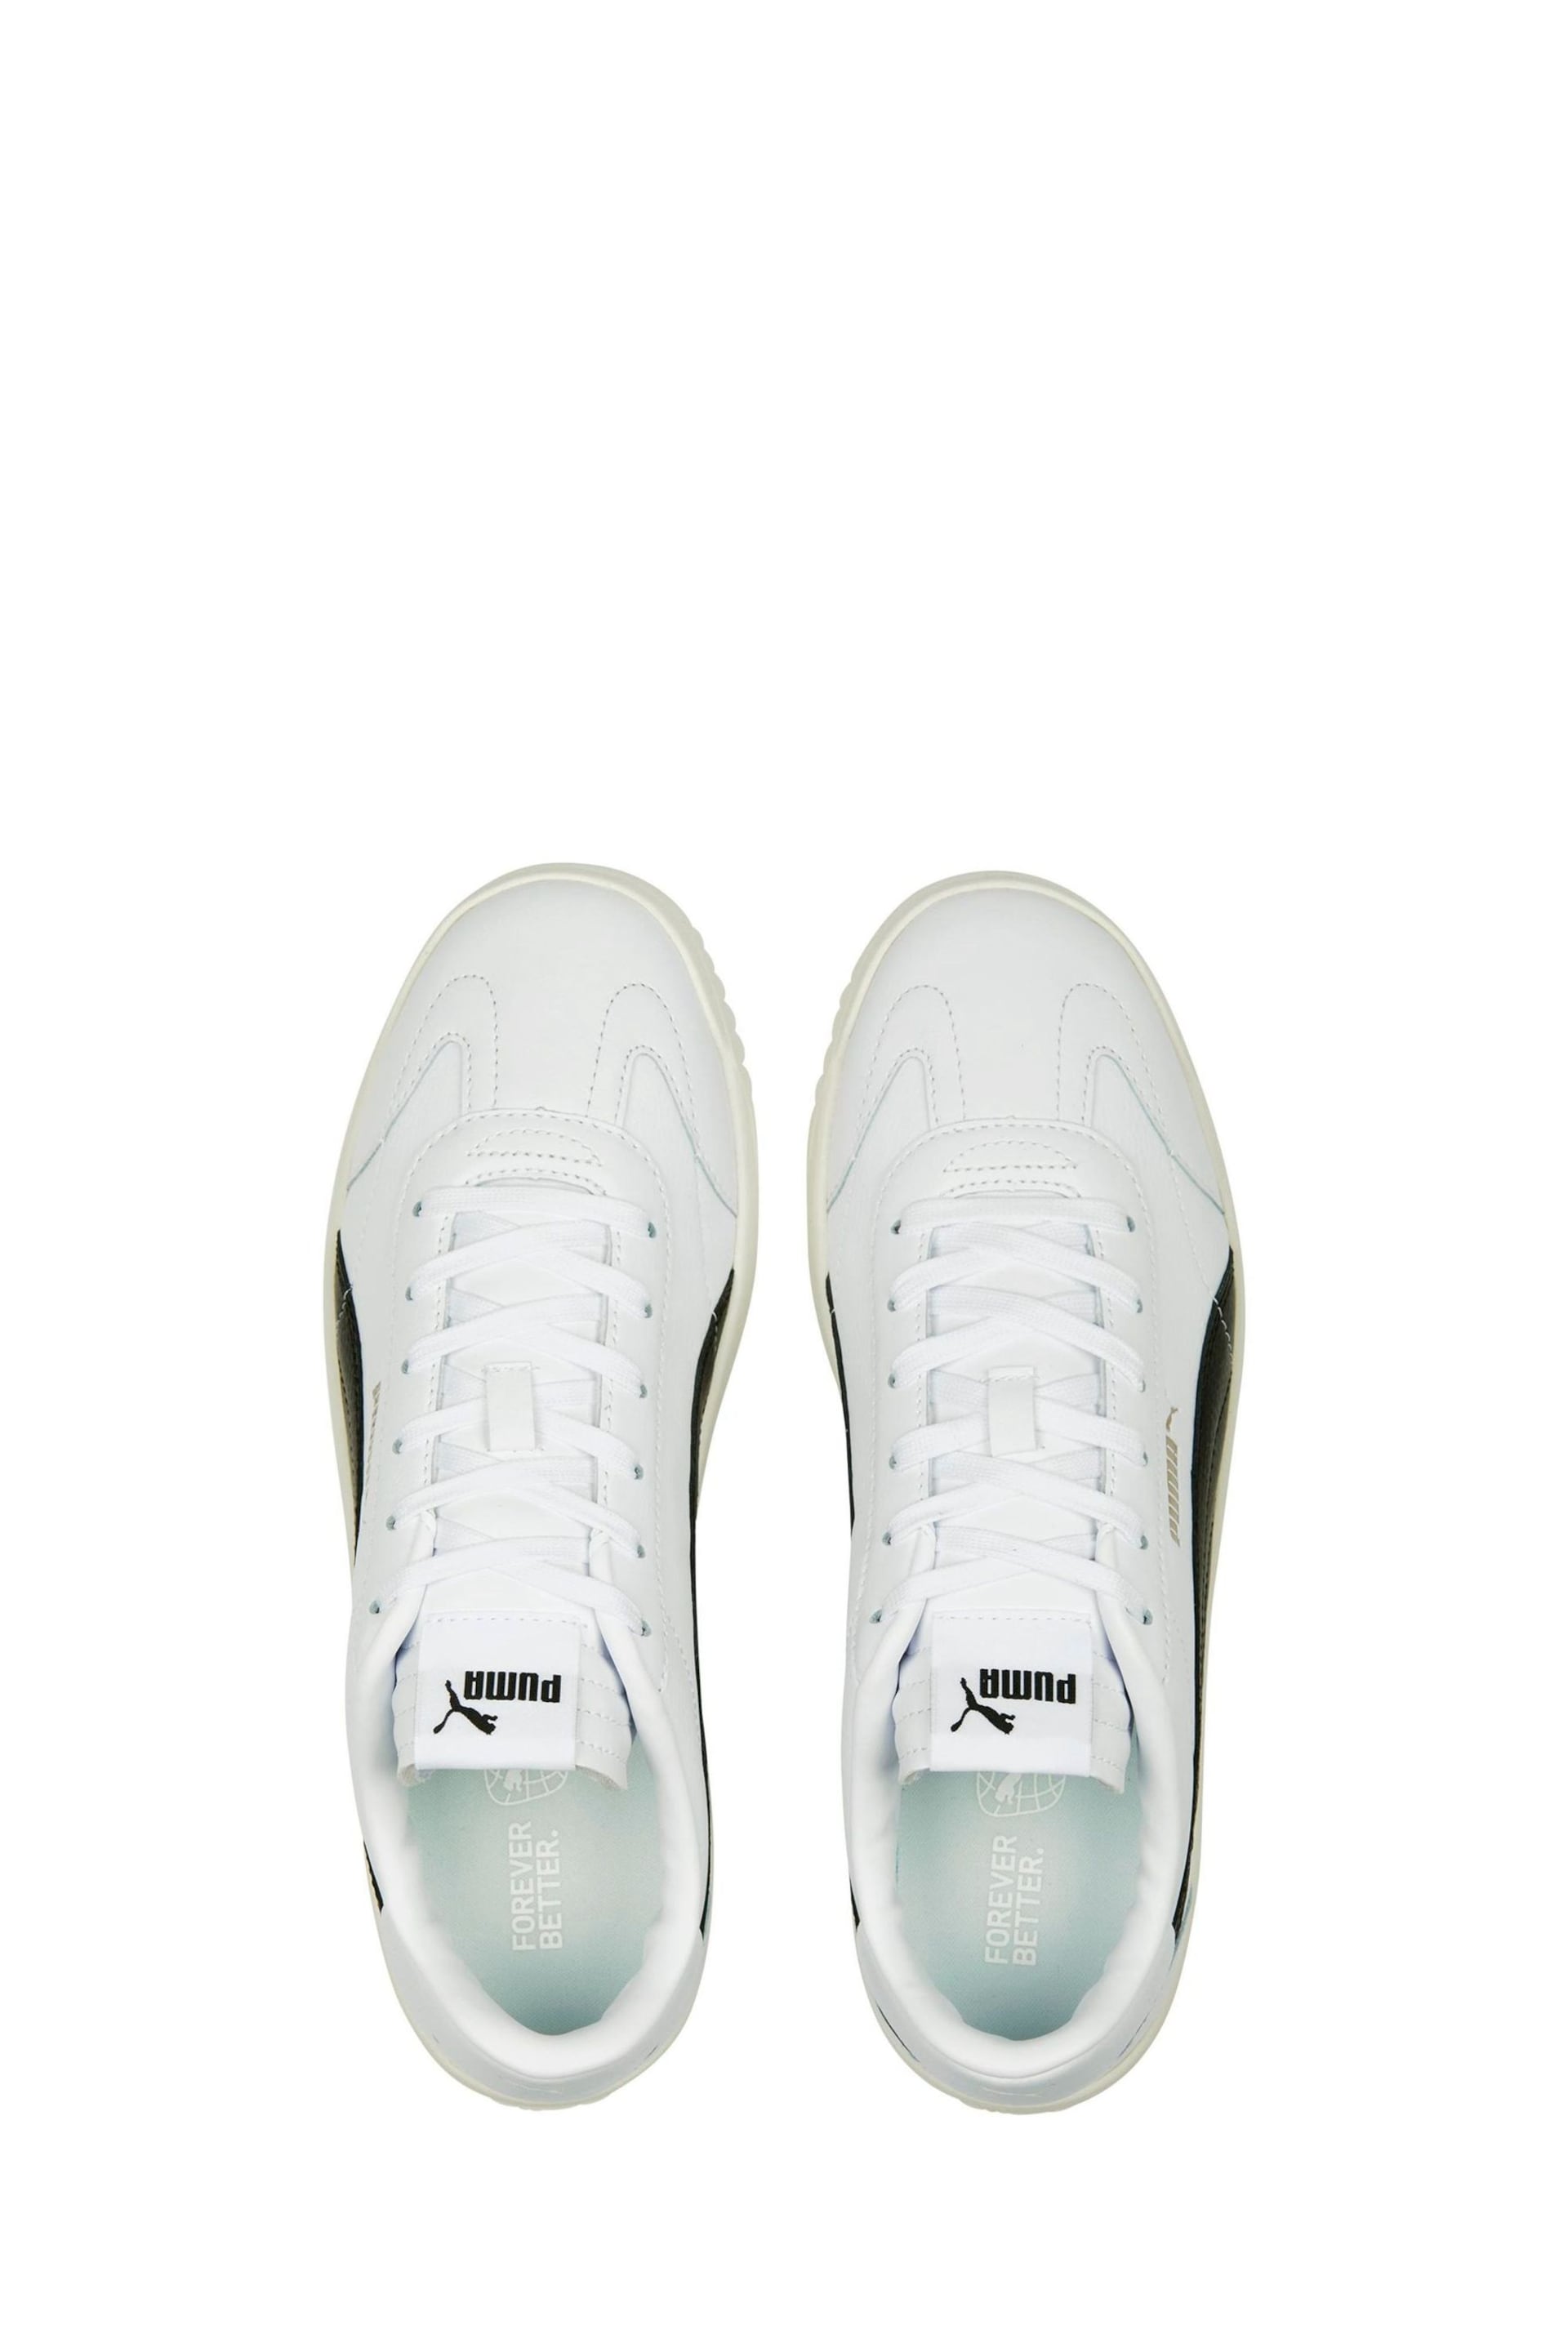 Puma White Mens Club 5v5 Sneakers - Image 4 of 5